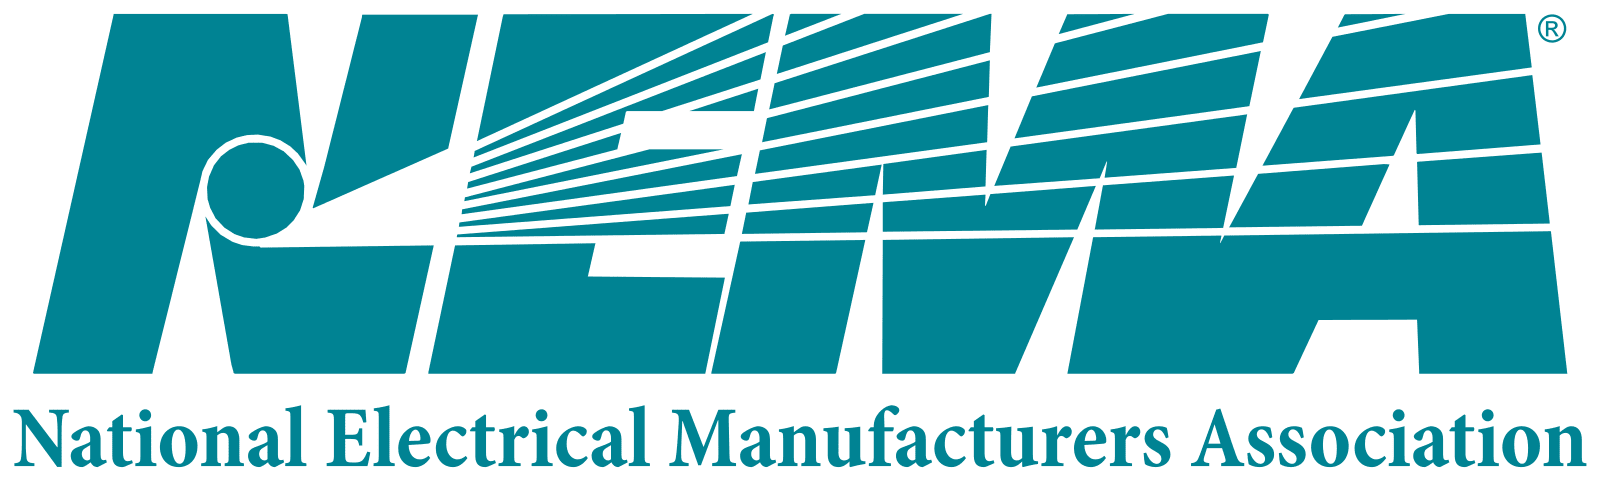 National Electrical Manufacturers Association Logo